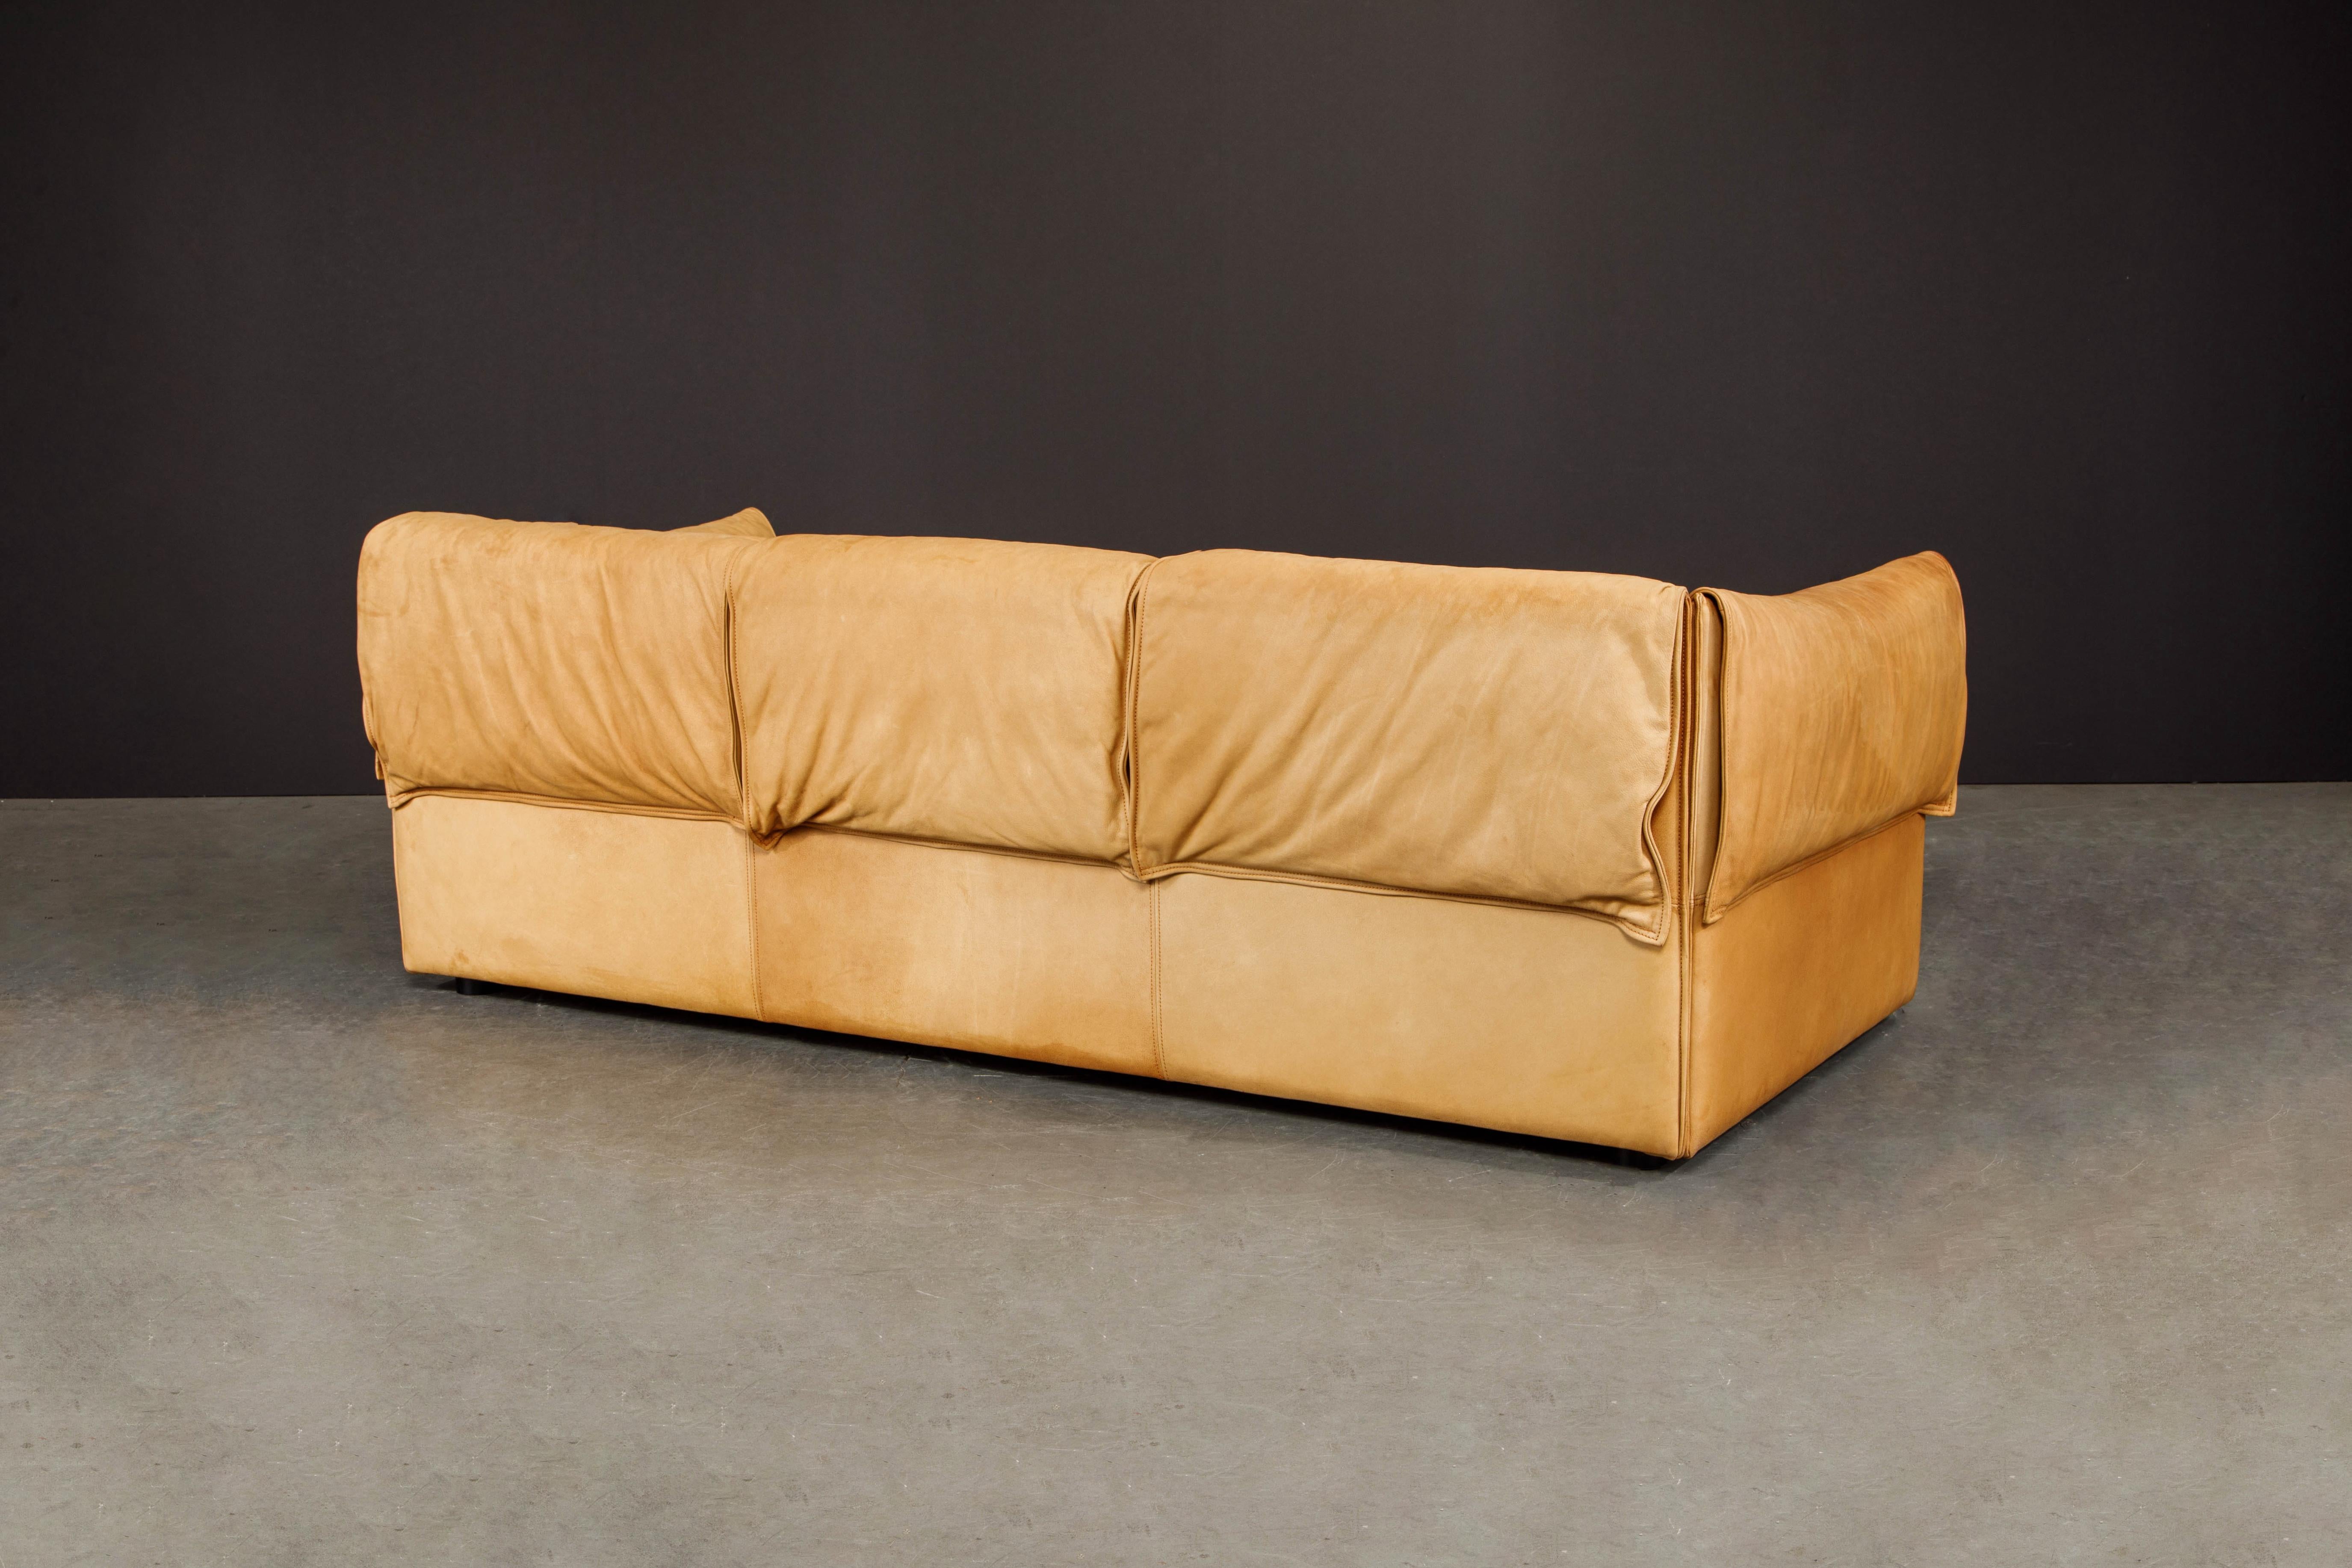 Scandinavian Modern 'Lotus' Leather Sofa by Niels Bendtsen for Niels Eilersen, 1970s Denmark, Signed